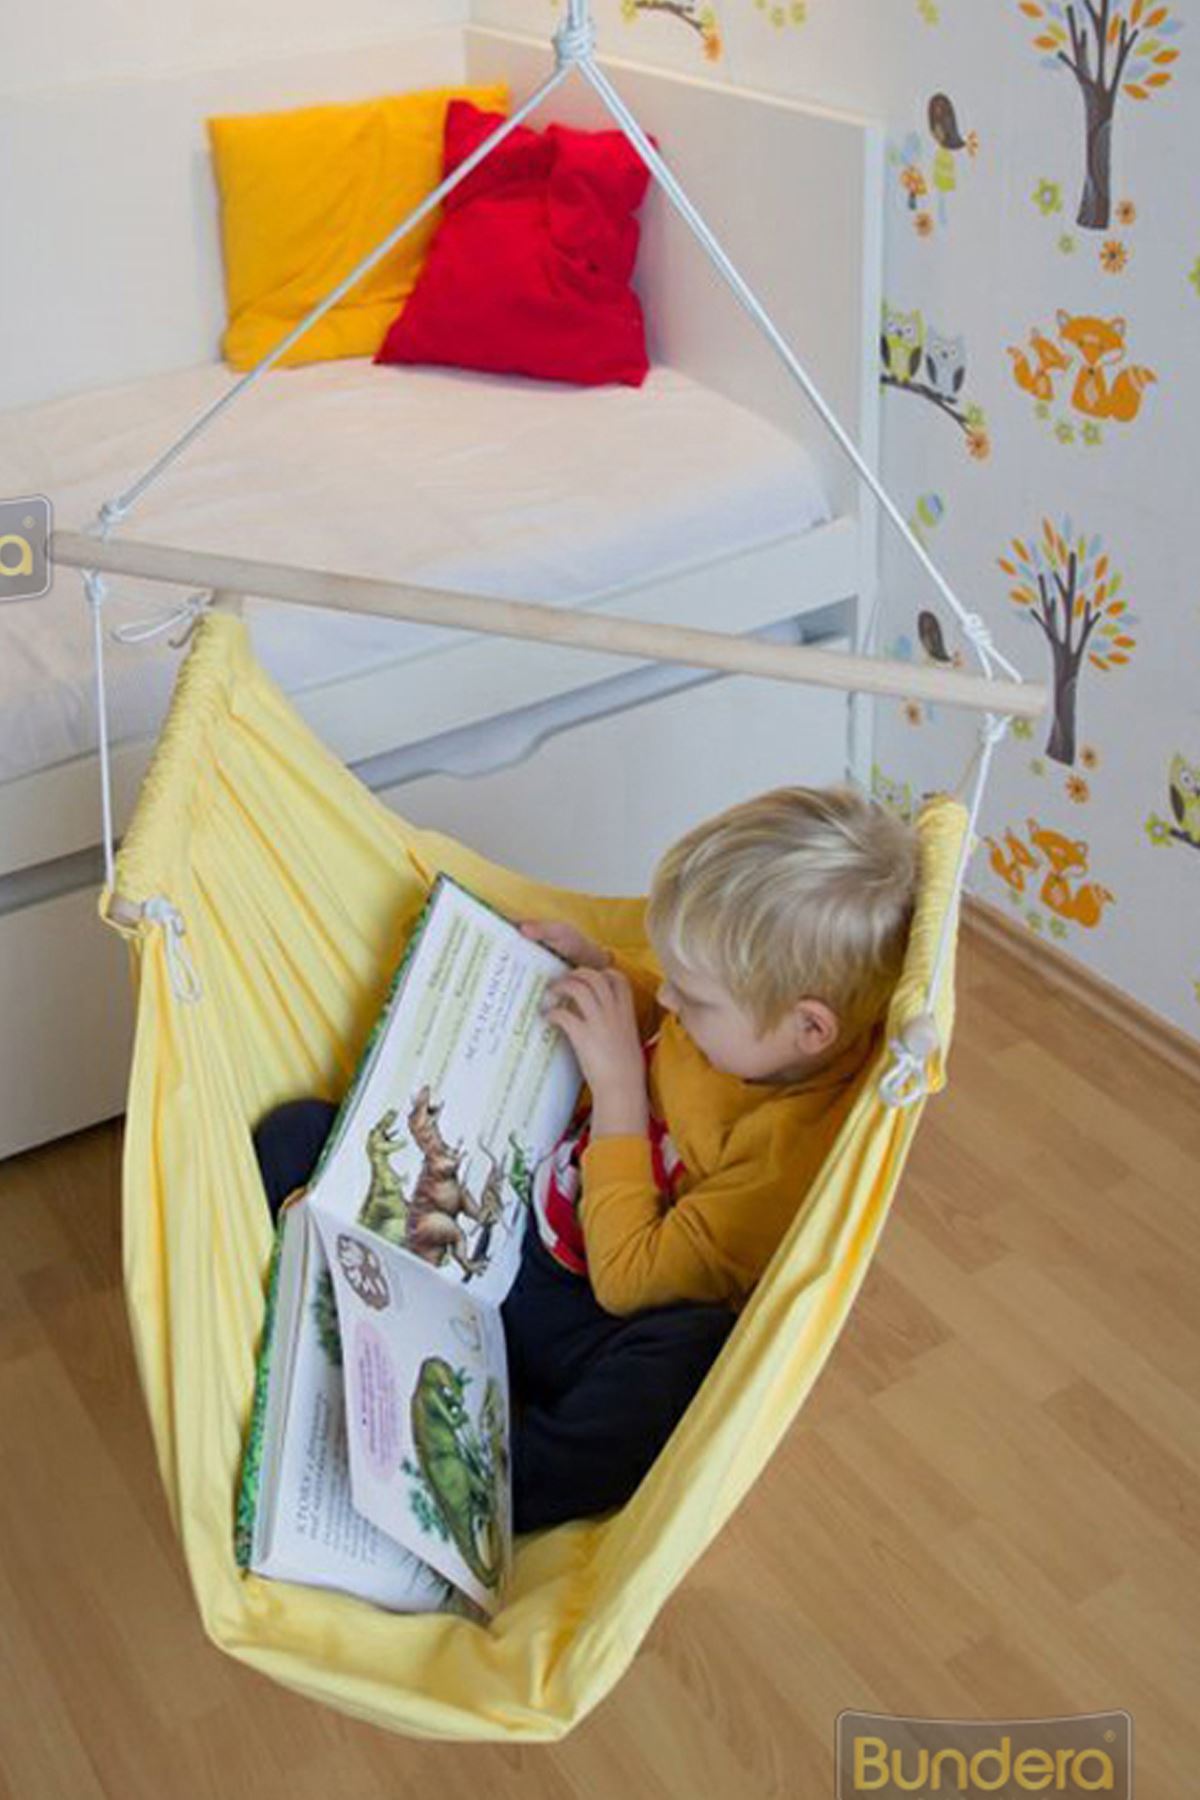 Girl Boy Child Teenager Wooden Baby Sleeping Crib Hammock Babies Toy Garden Camping Rope Swing Chair Fashion Home Fun Activity